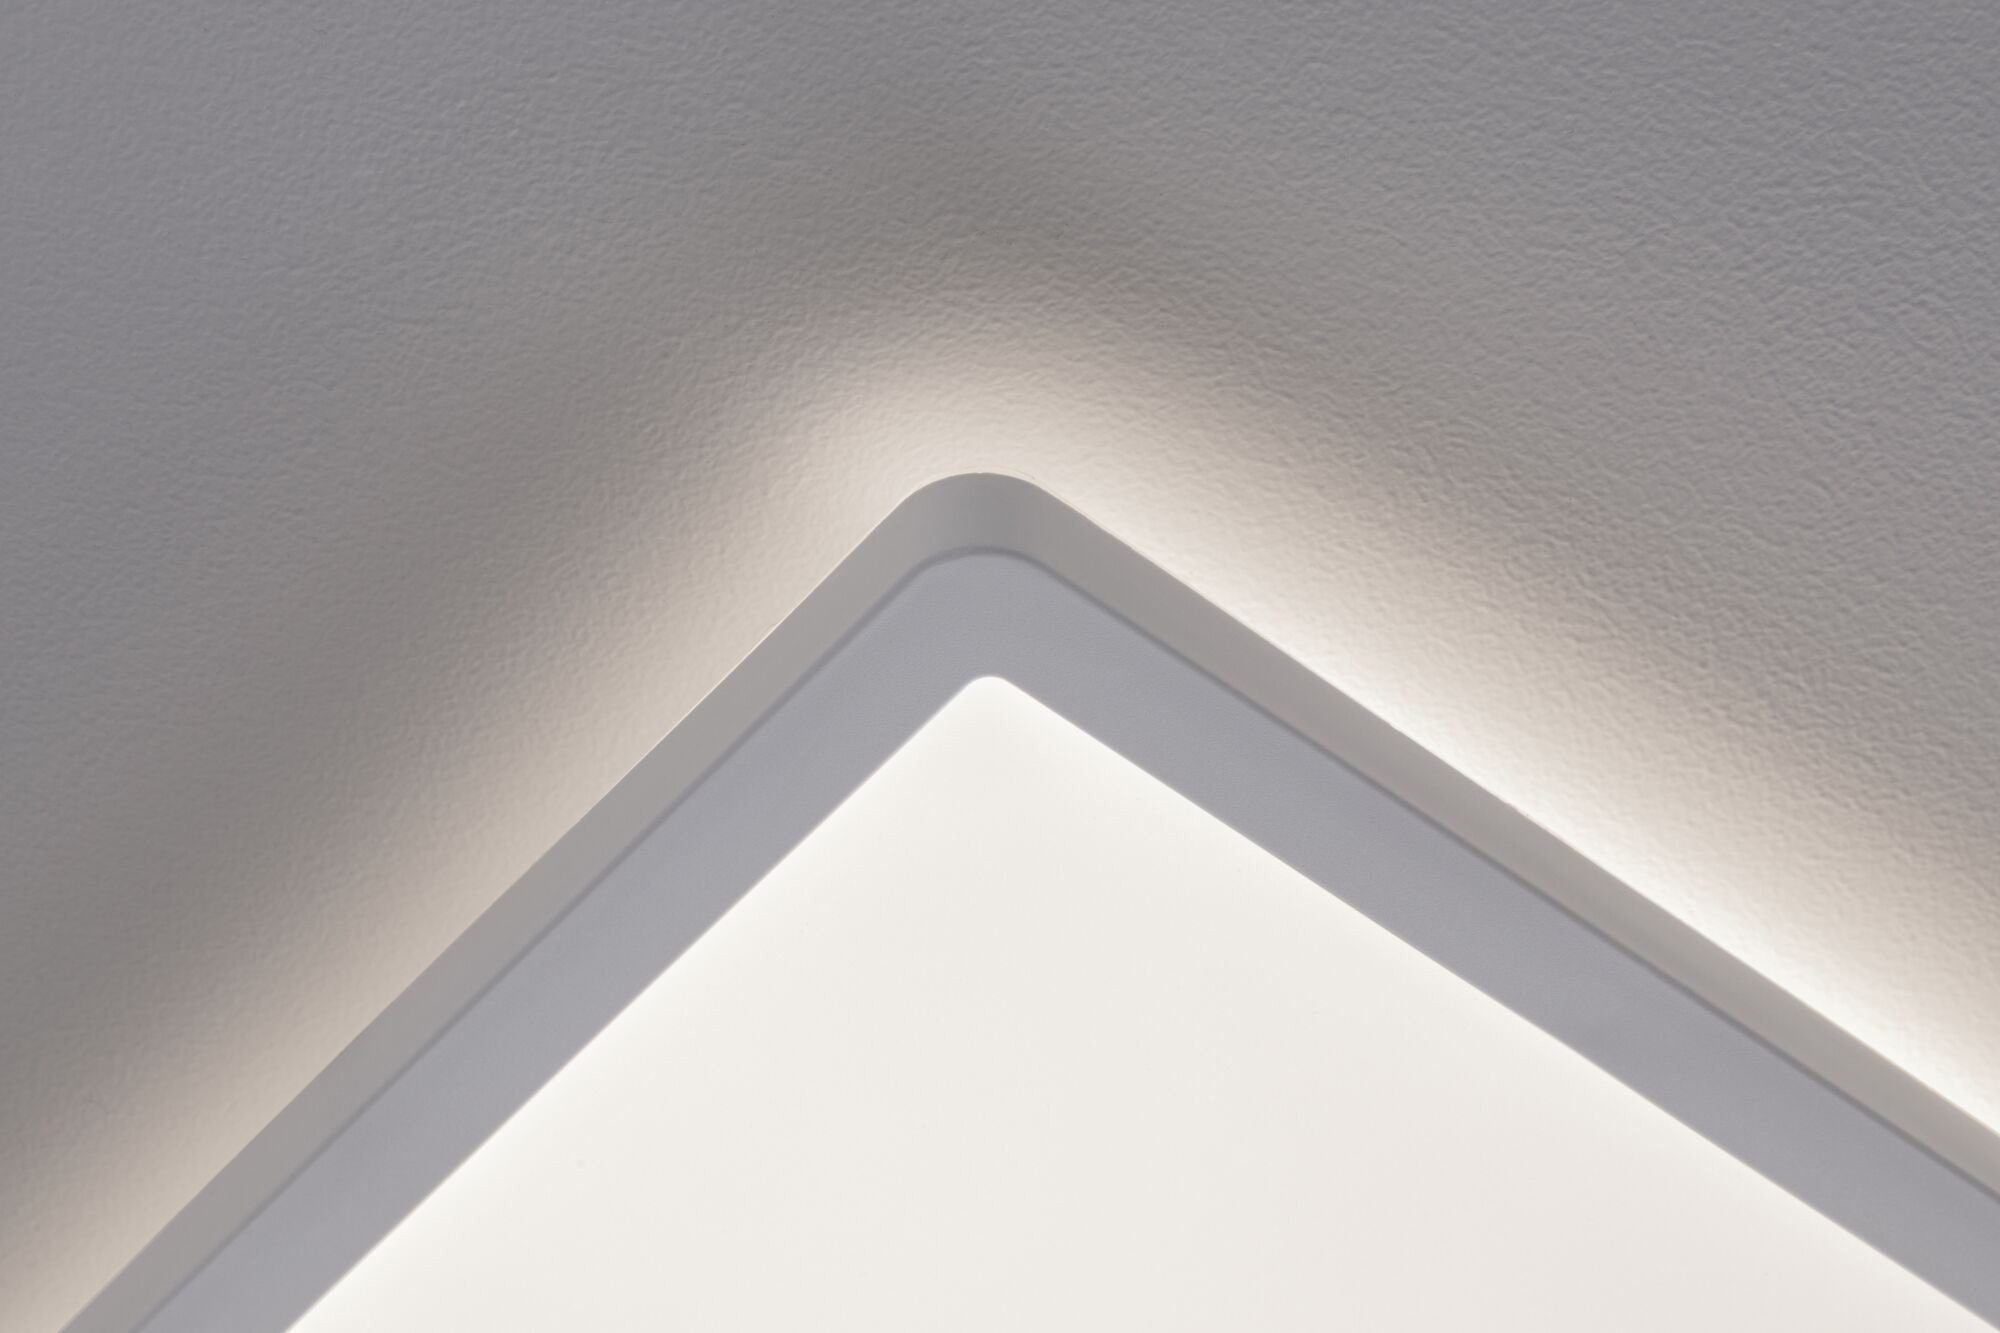 Neutralweiß LED Panel LED fest integriert, Shine, Atria Paulmann